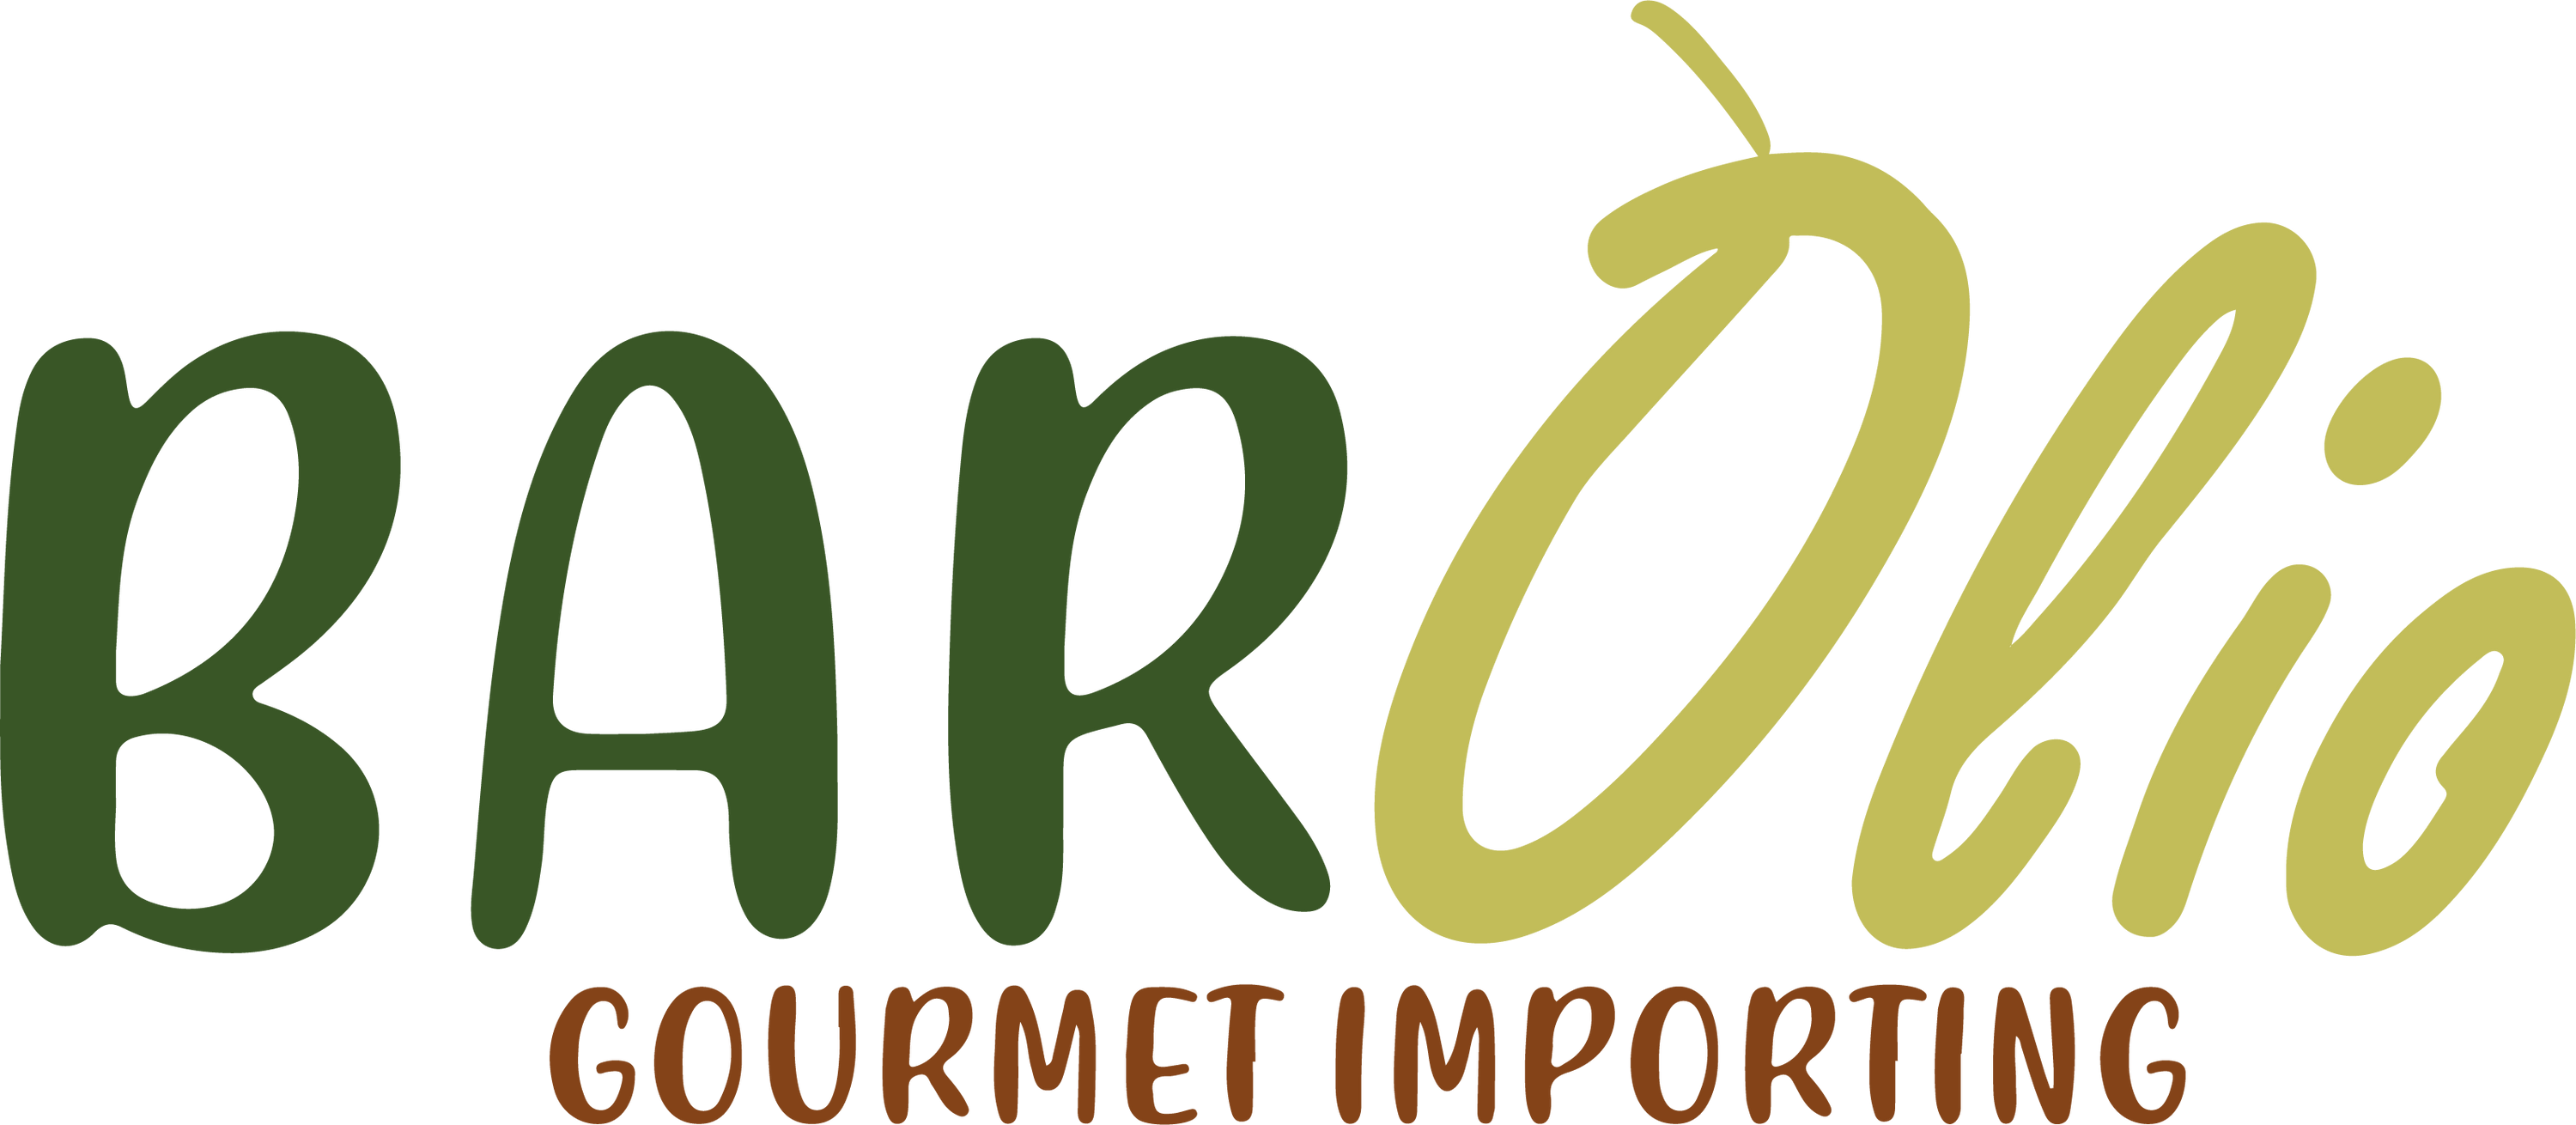 Barolio Gourmet Importing